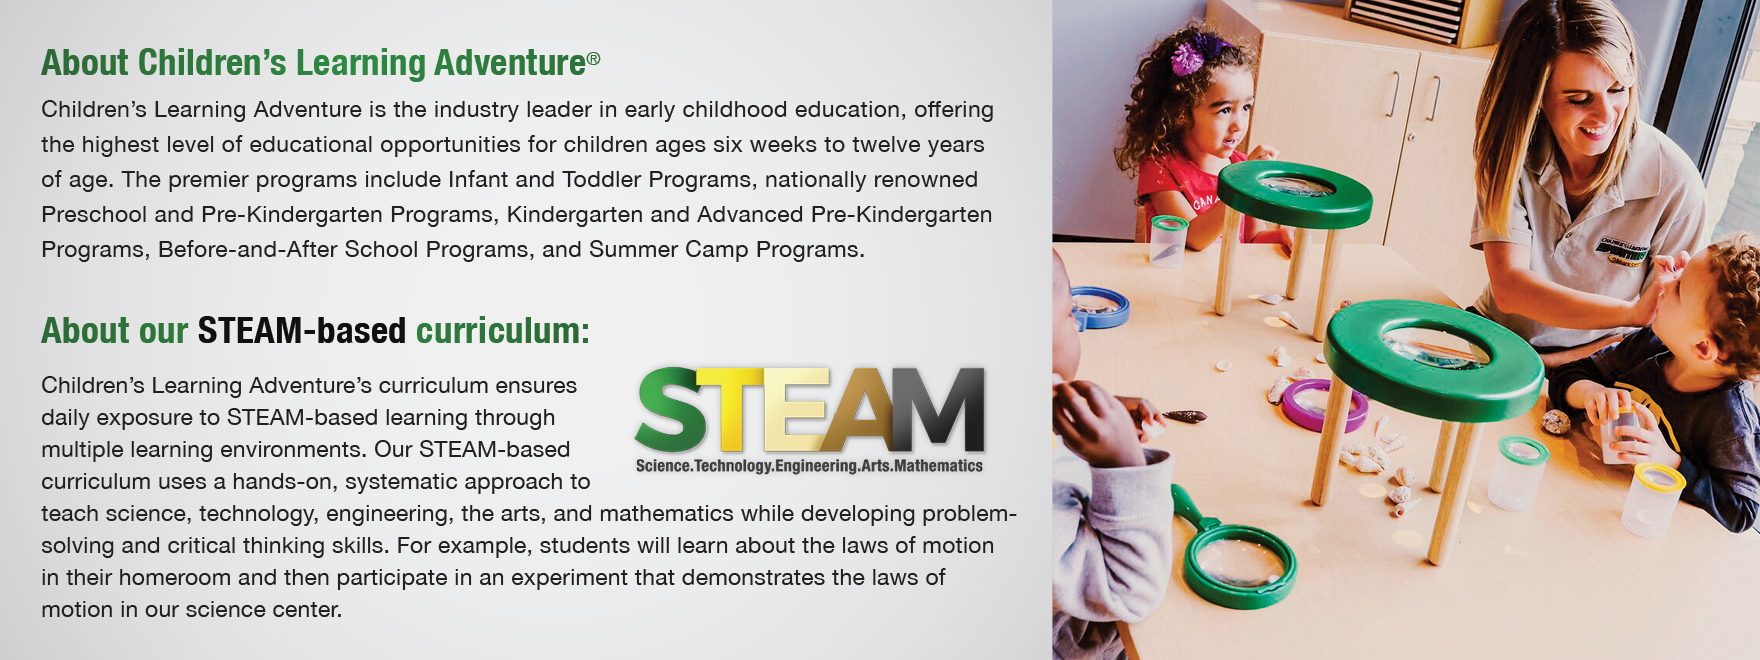 STEAM based learning high level childhood education Image